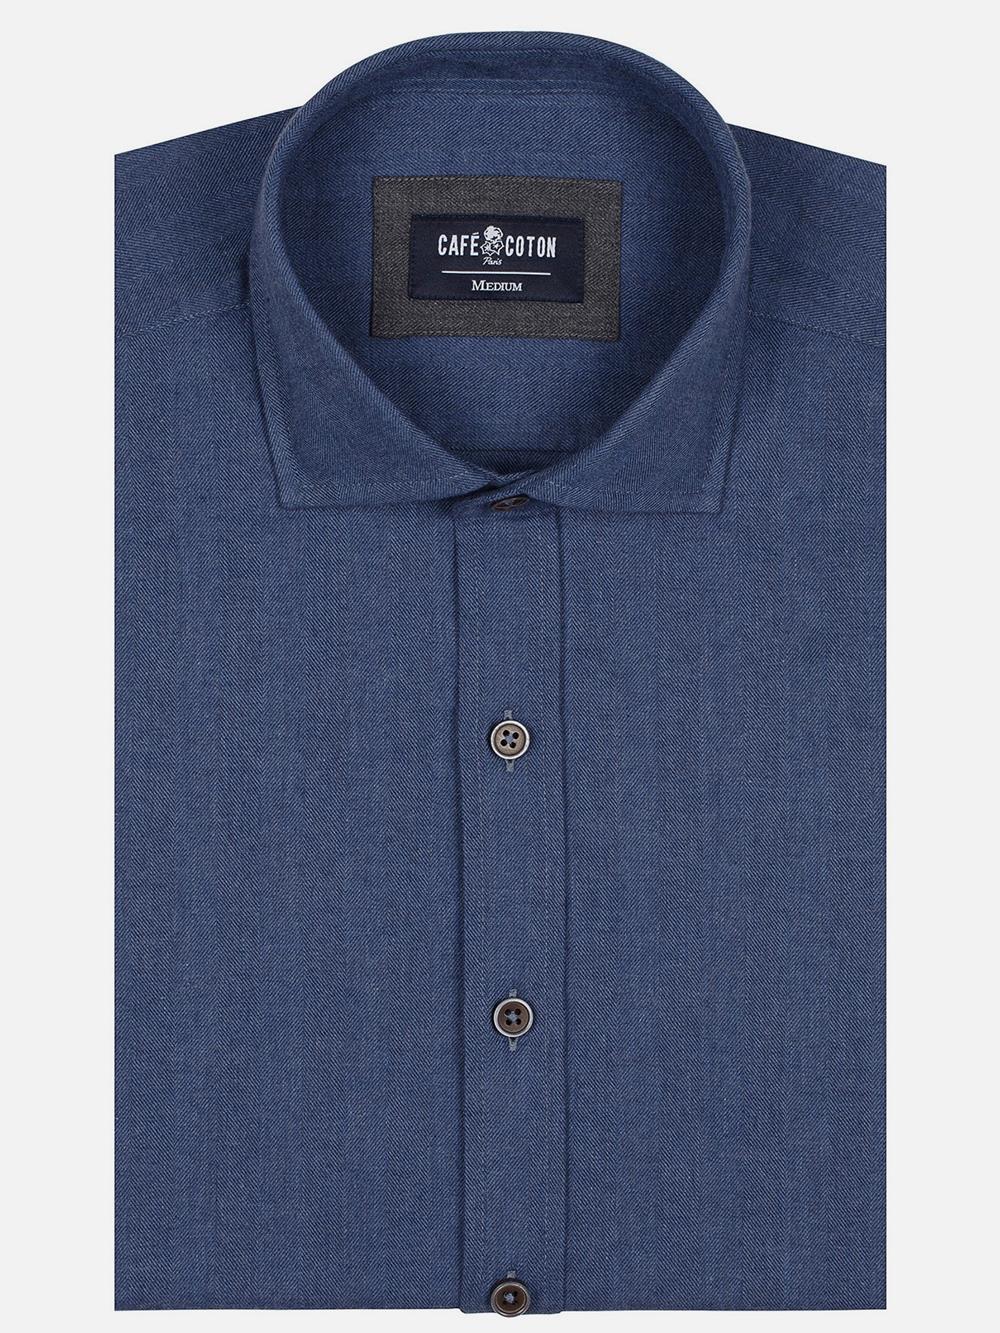 Herringbone navy flannel shirt